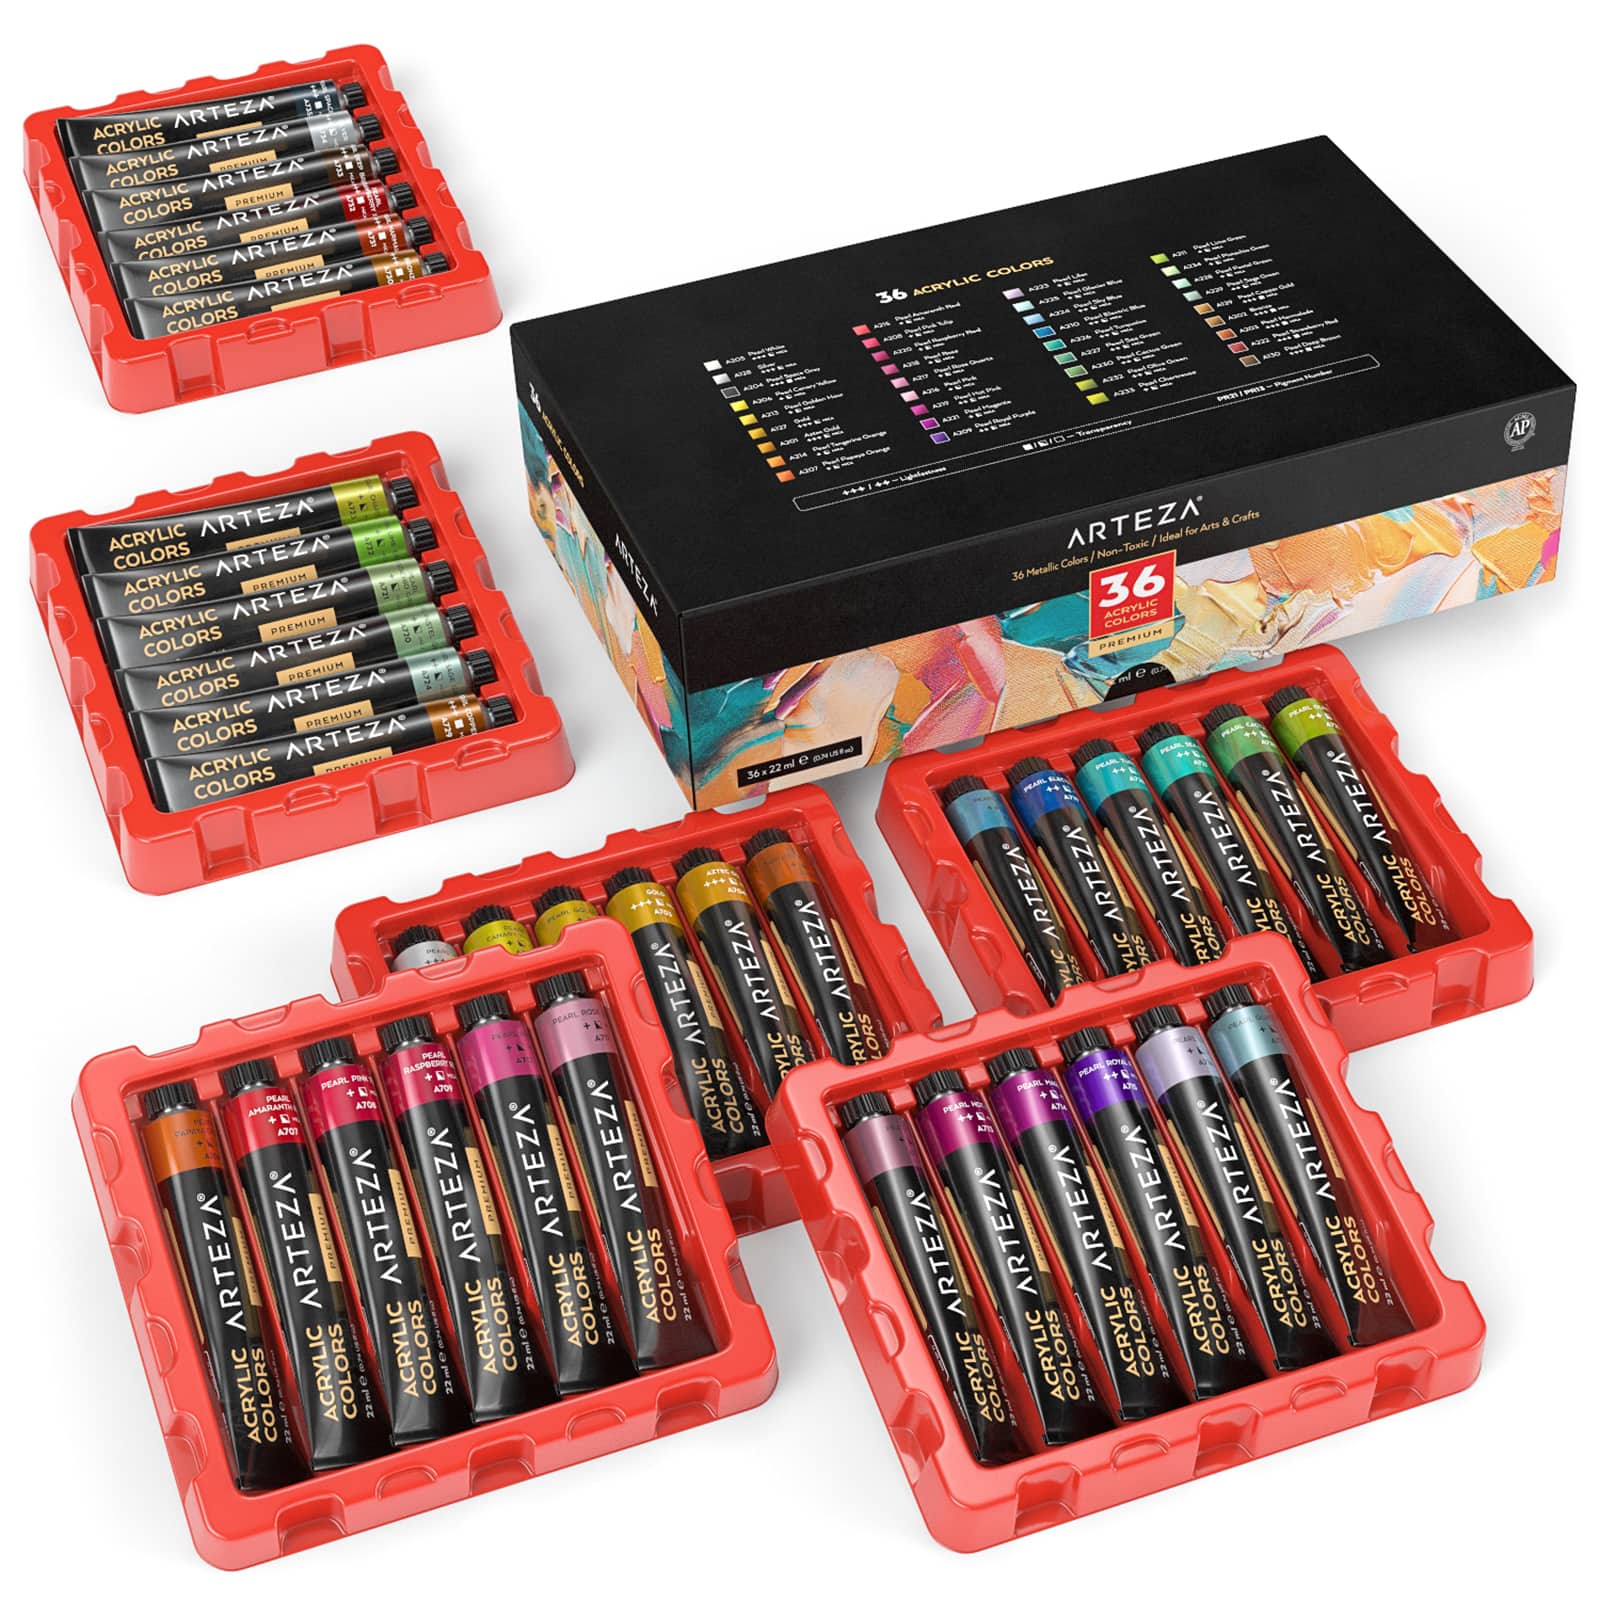  ARTEZA Acrylic Paint Markers, Set of 12 Metallic